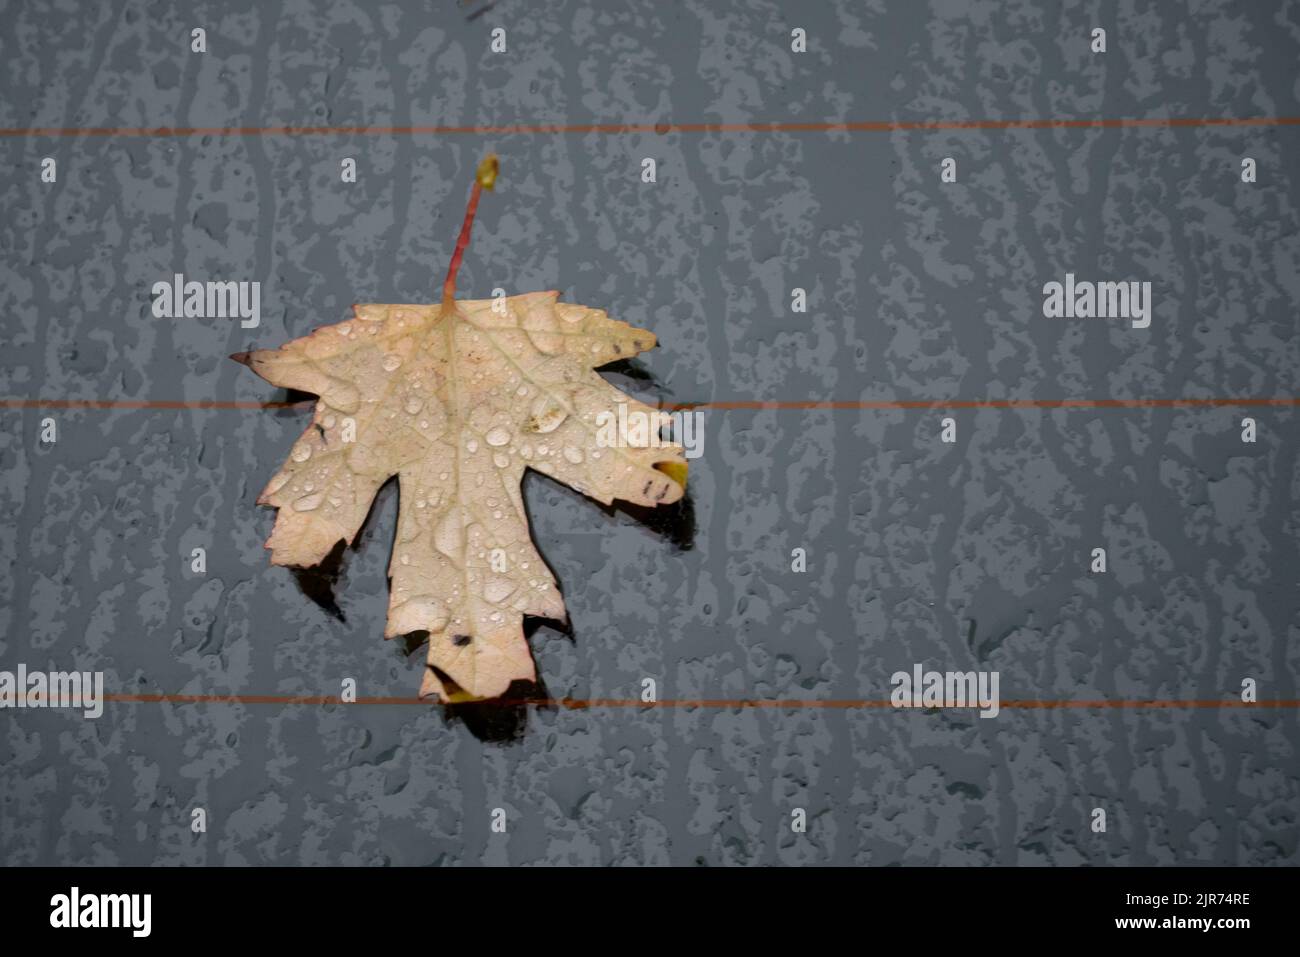 Autumn marple leaf on rainy gray surface. Top view Stock Photo